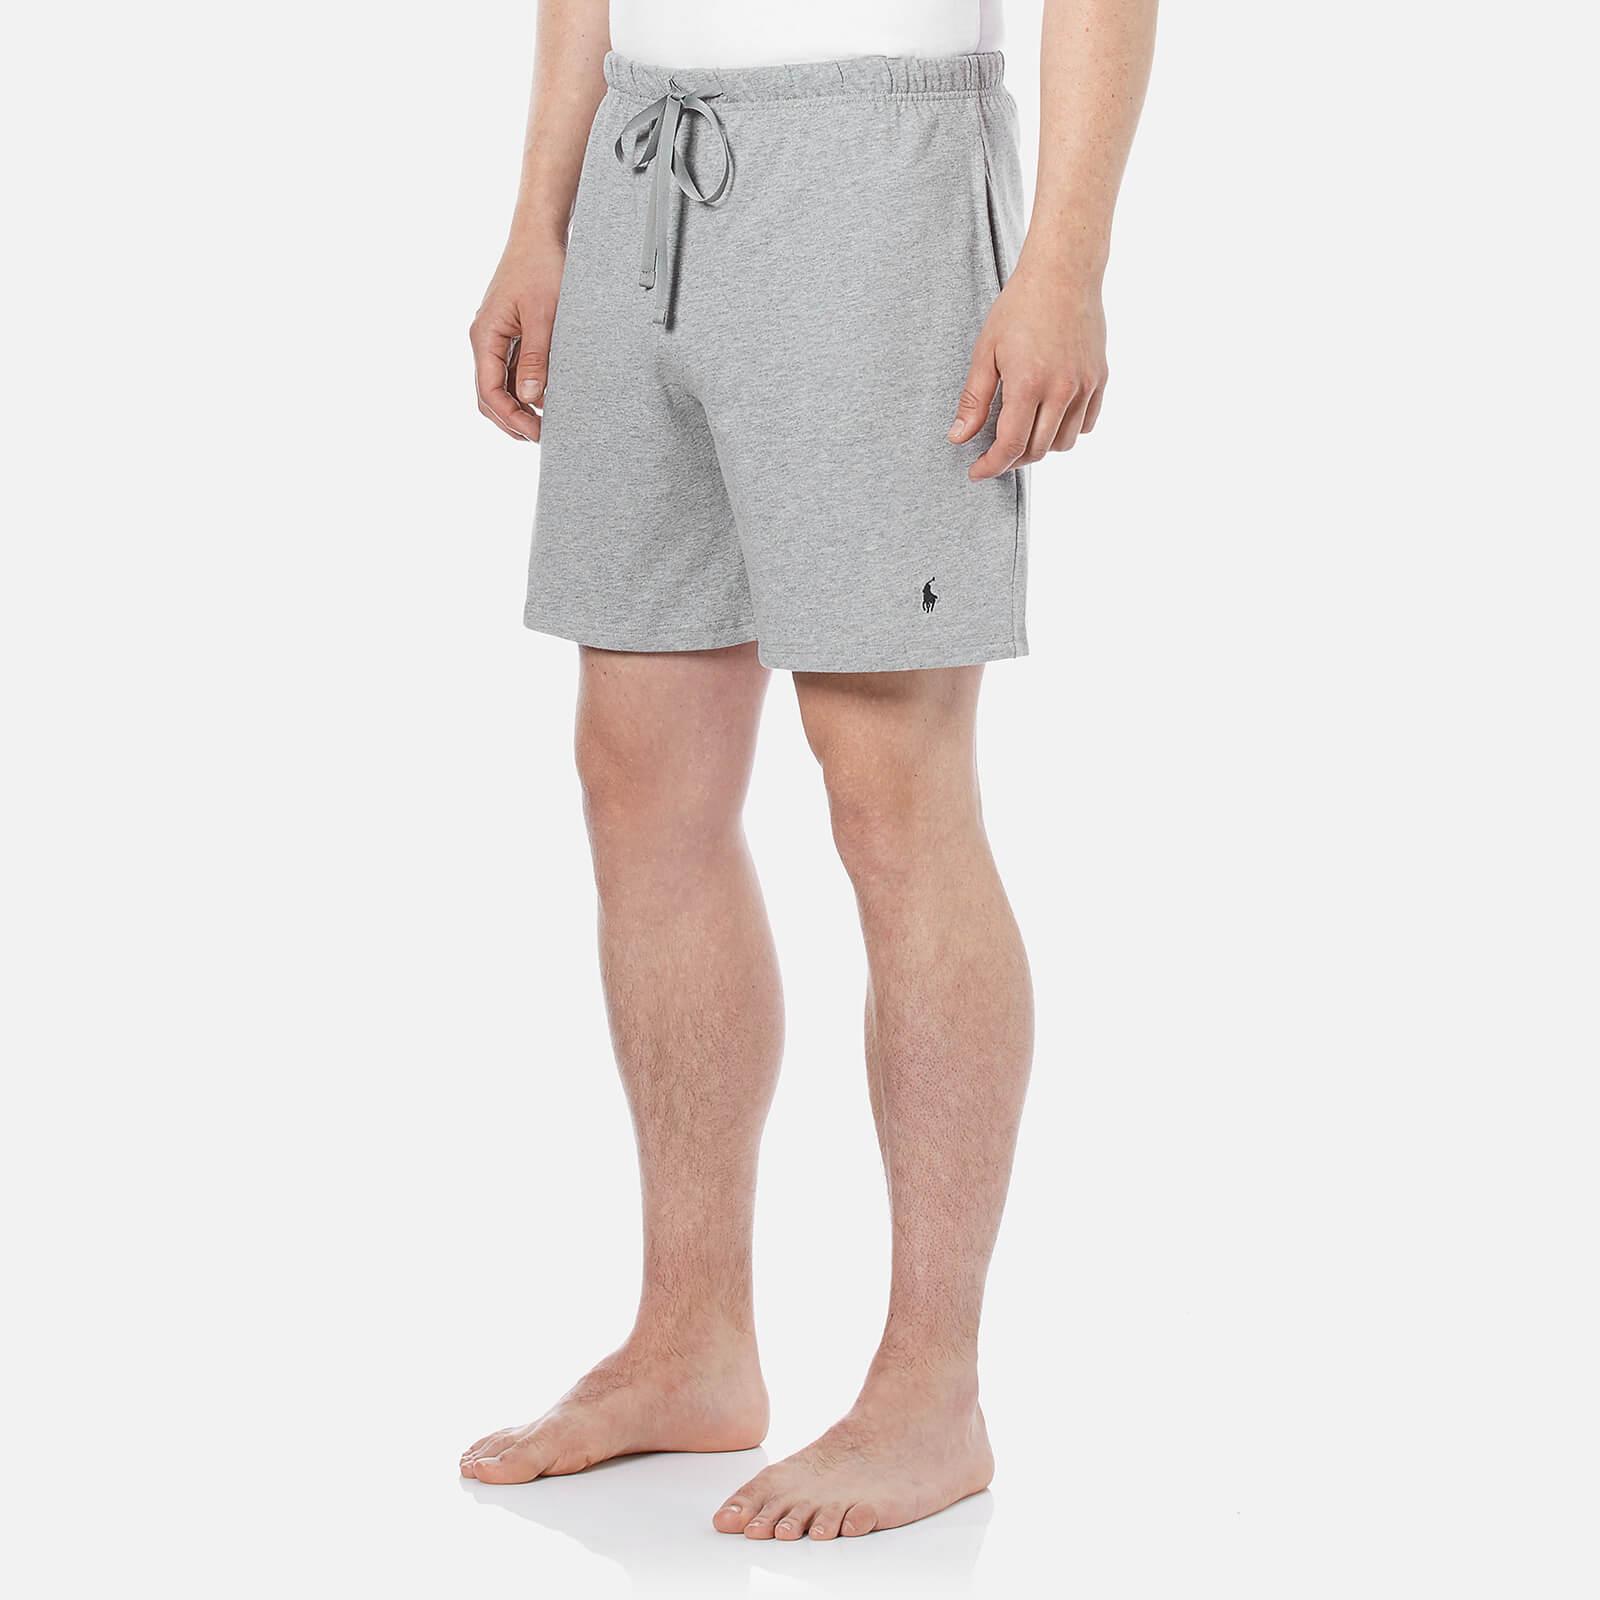 polo ralph lauren grey shorts